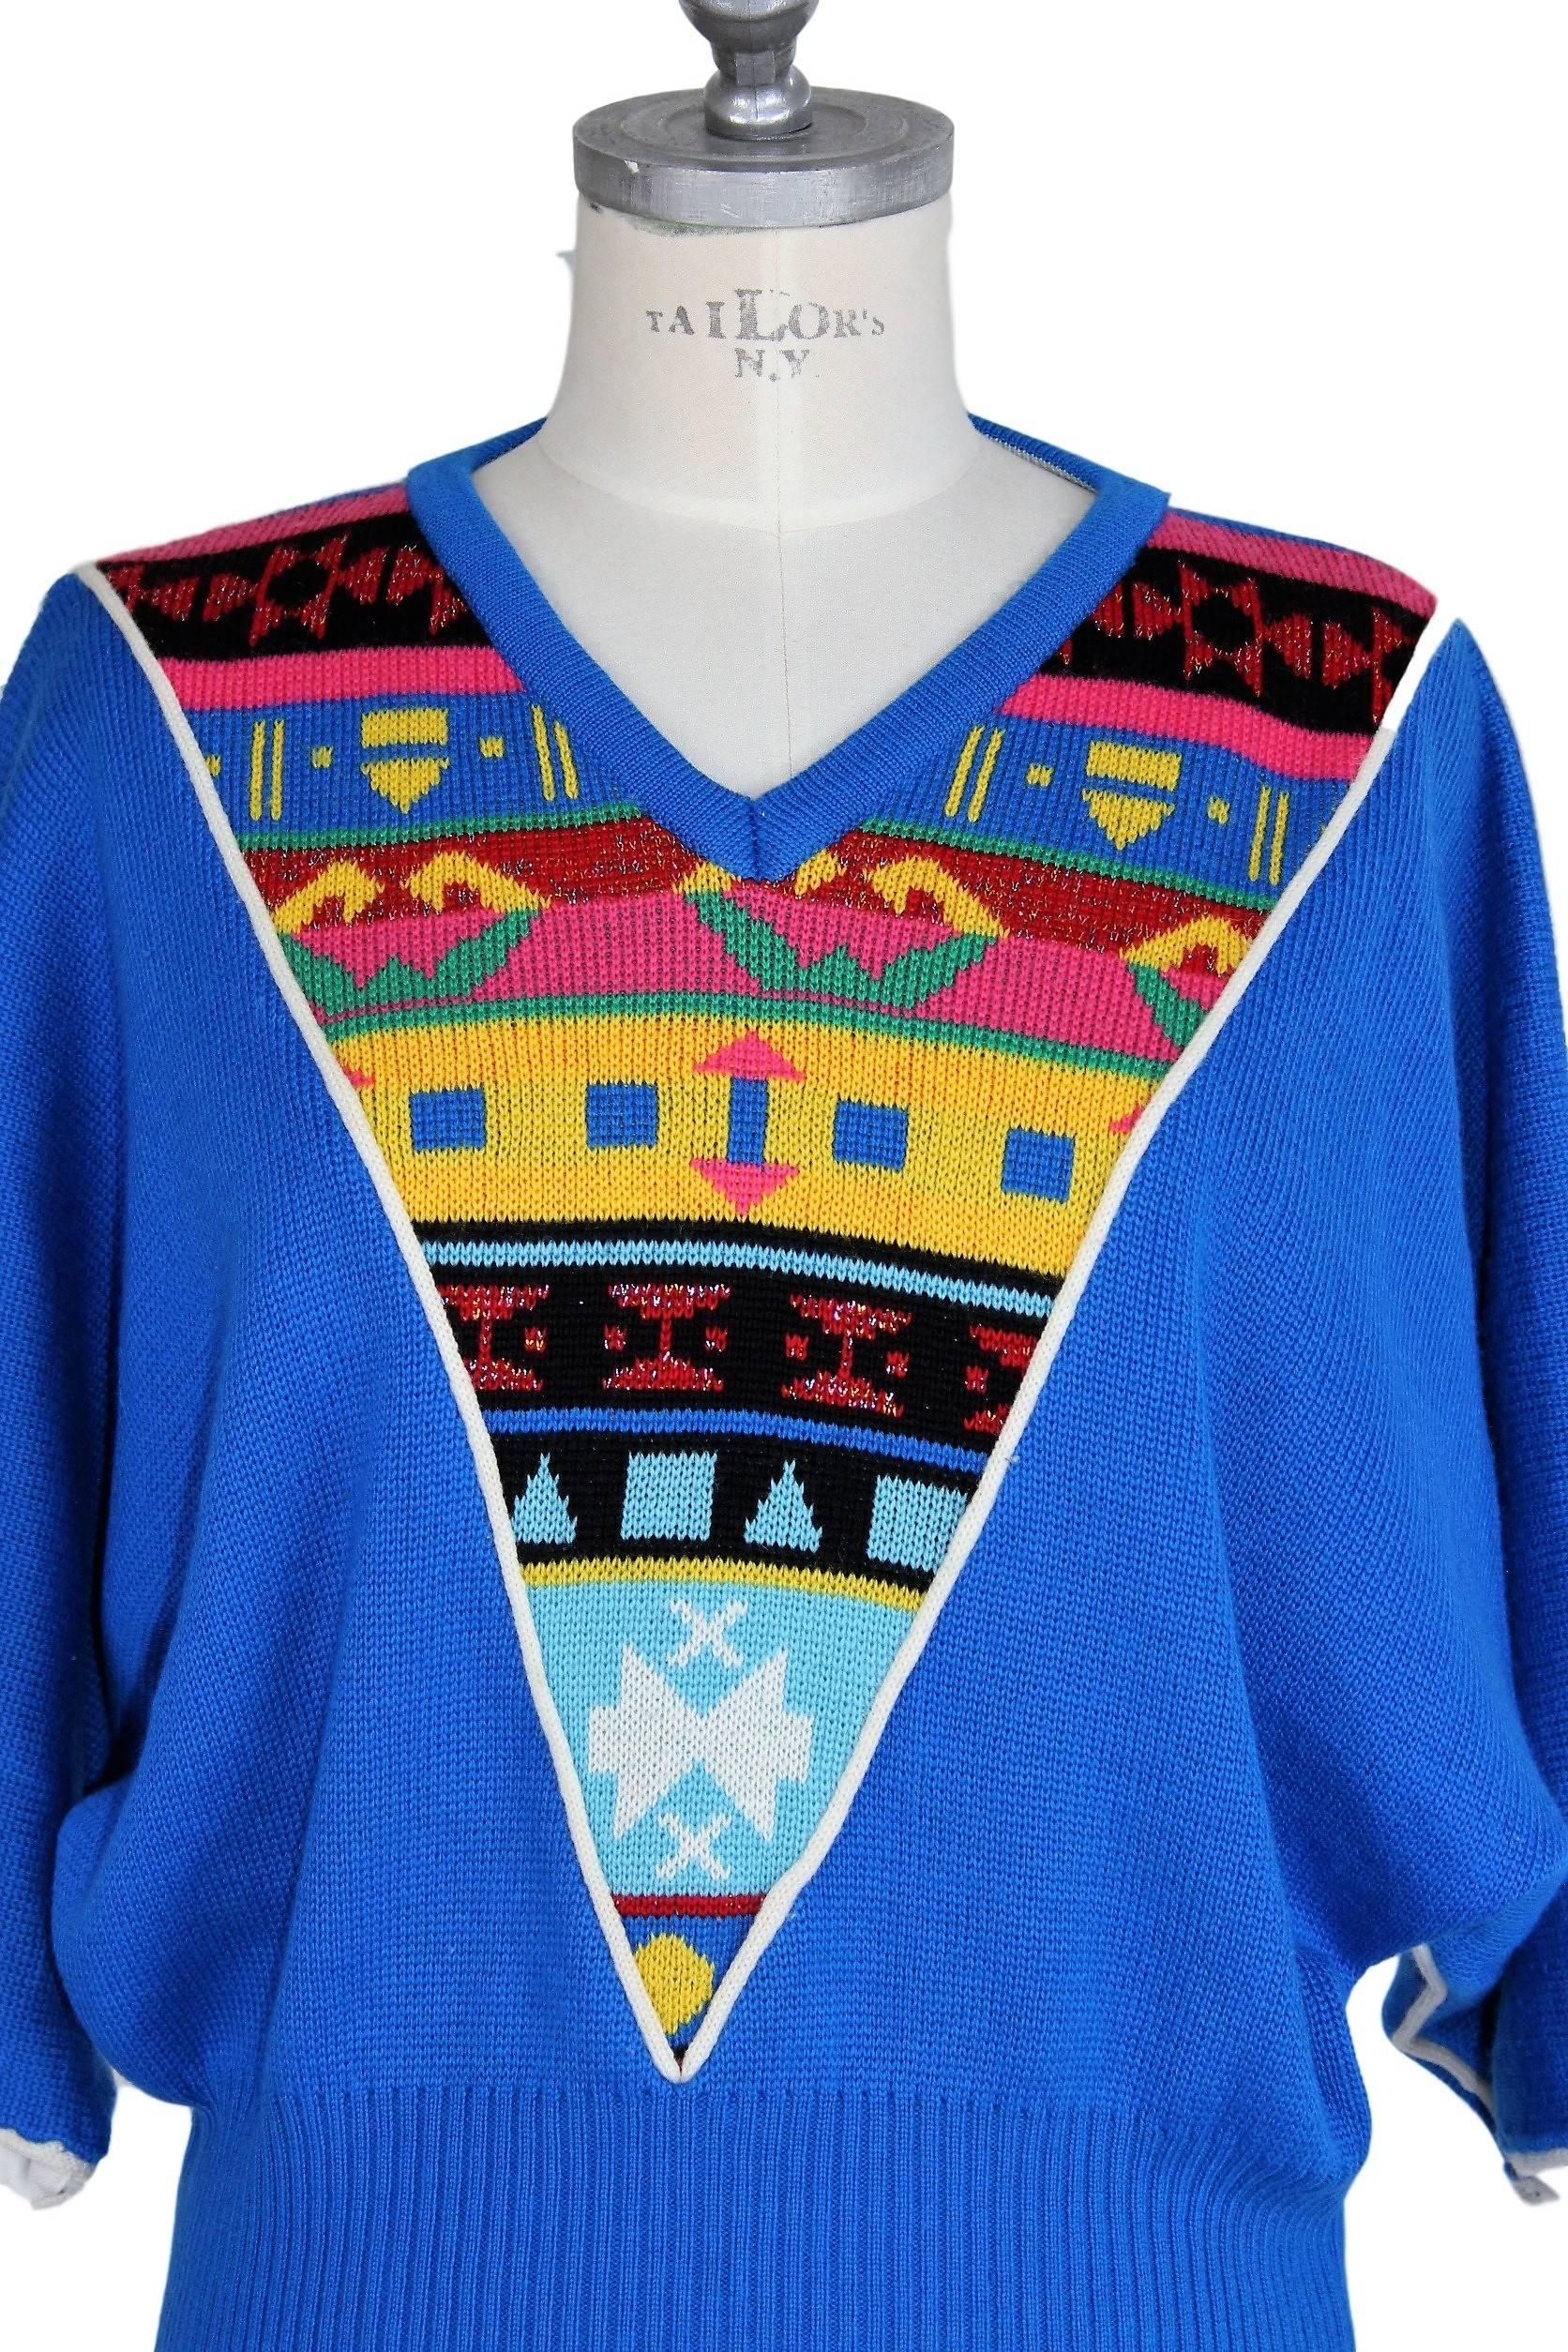 Pierre Cardin Paris Batwing Blue V-Neck Sweater, 1980 For Sale 2